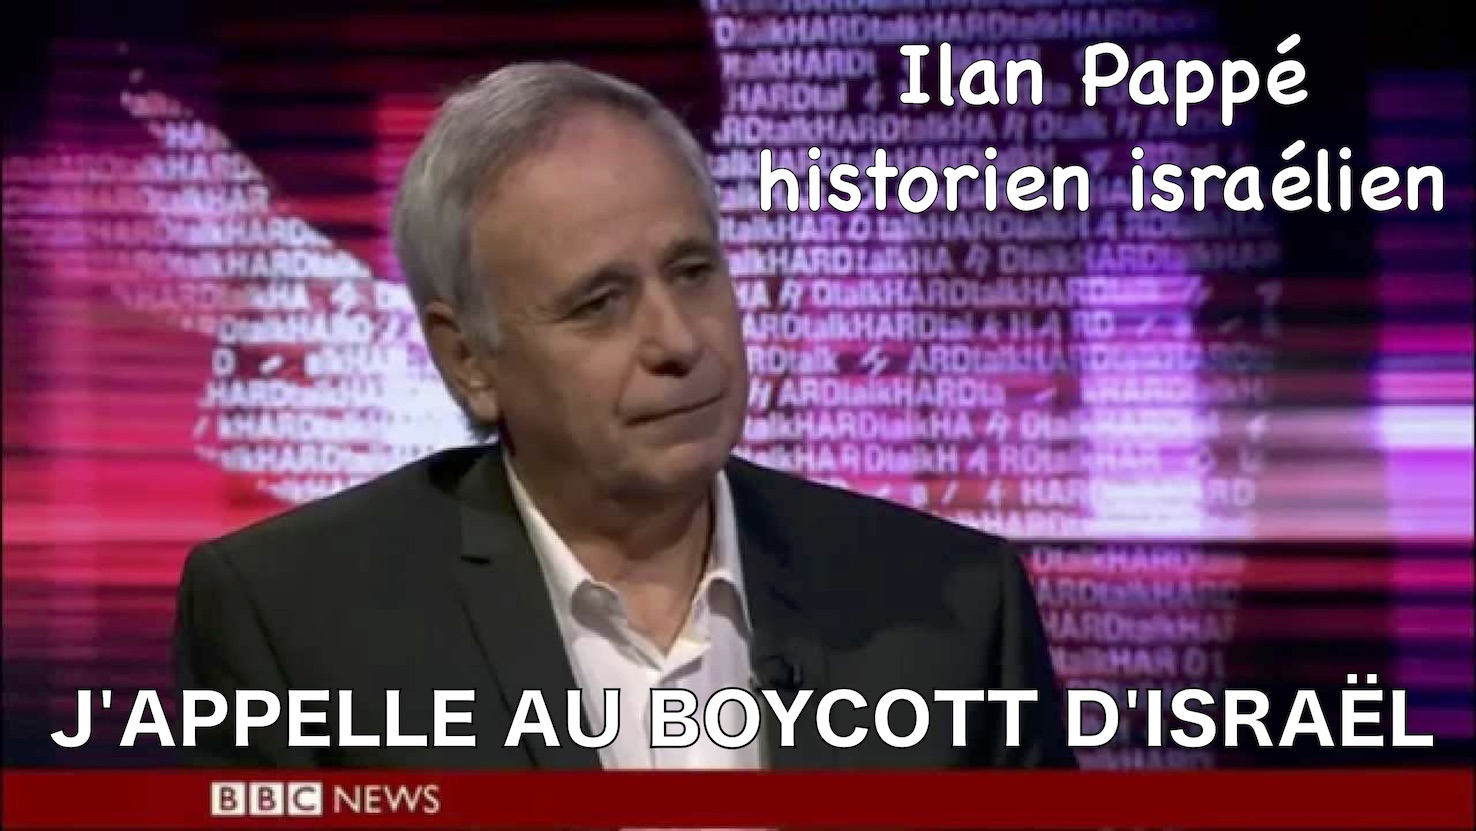 ilan_pappe_boycott_jpg-3.jpg